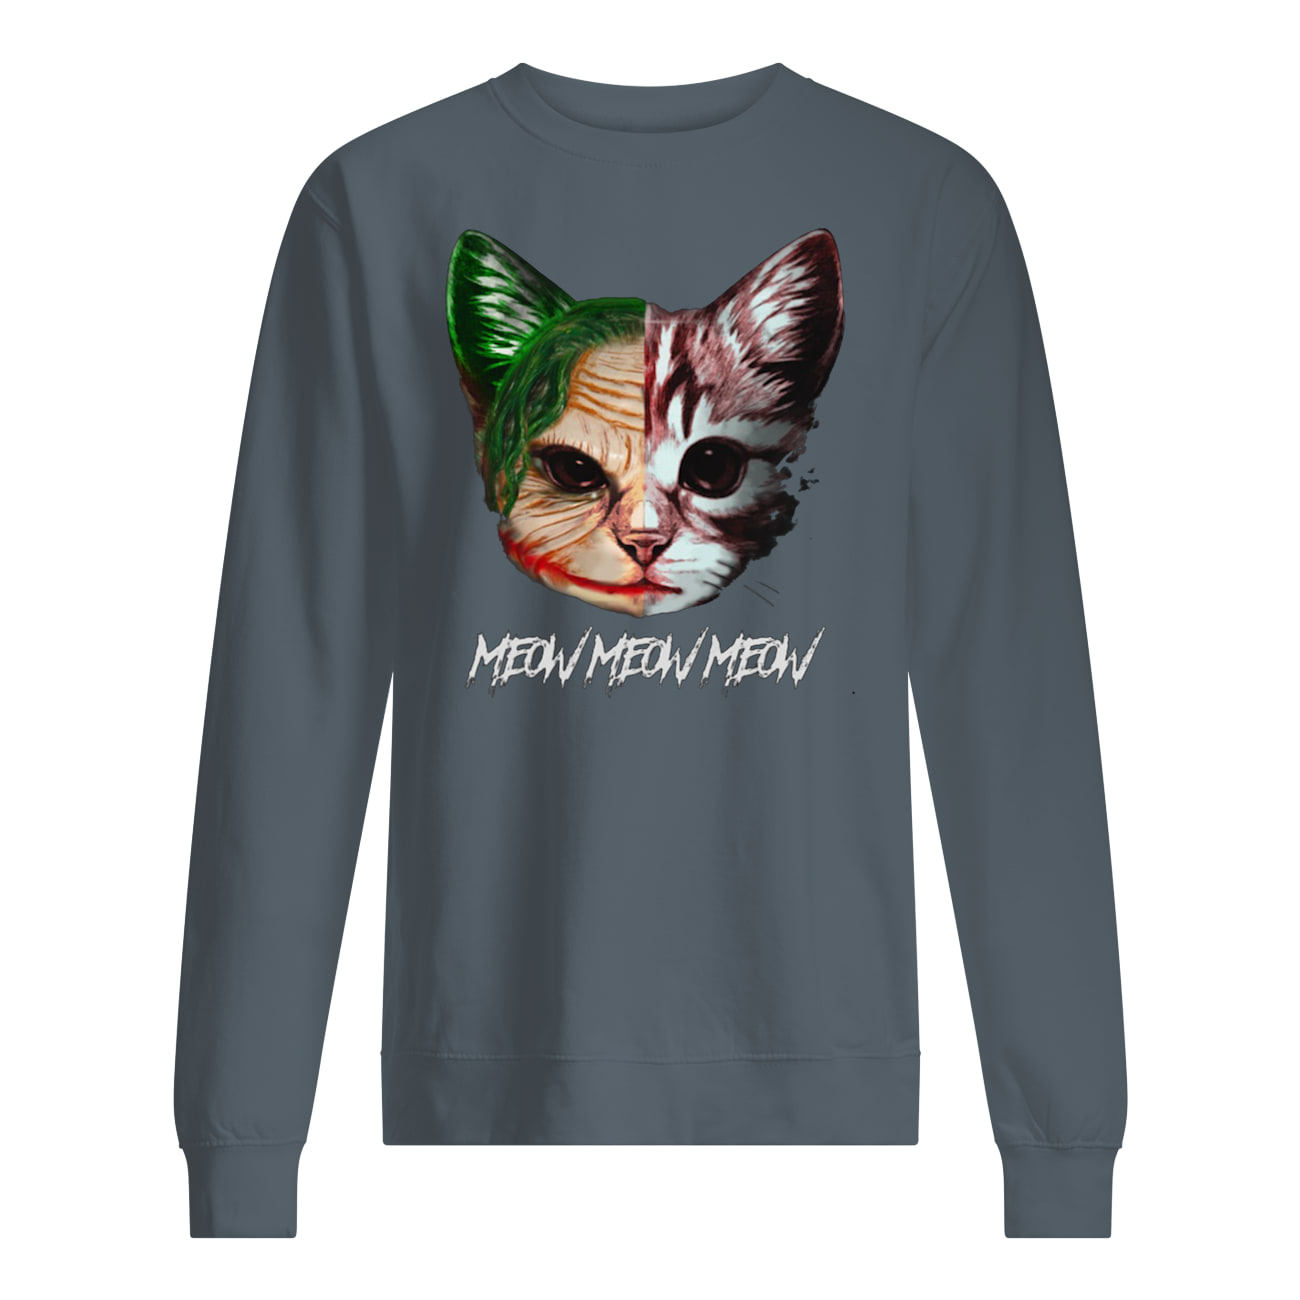 Meow meow meow cat joker sweatshirt